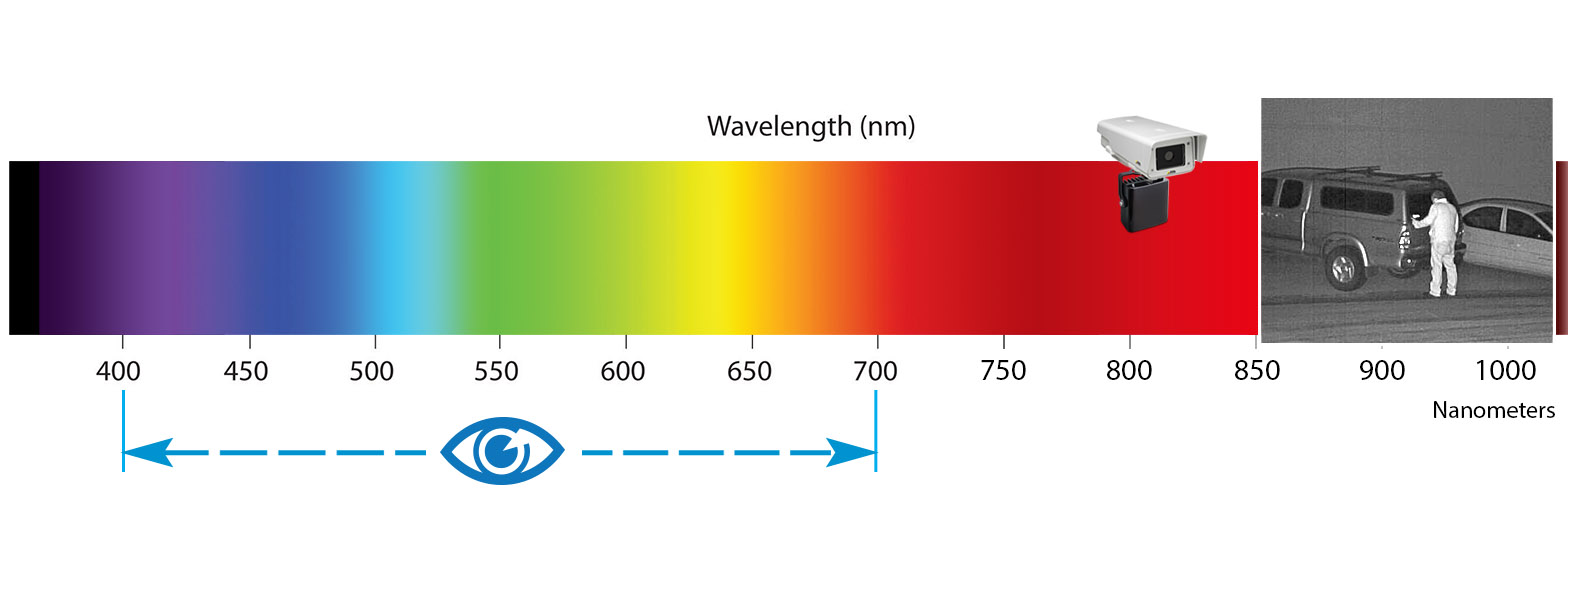 Cos'è l'illuminatore a infrarossi?